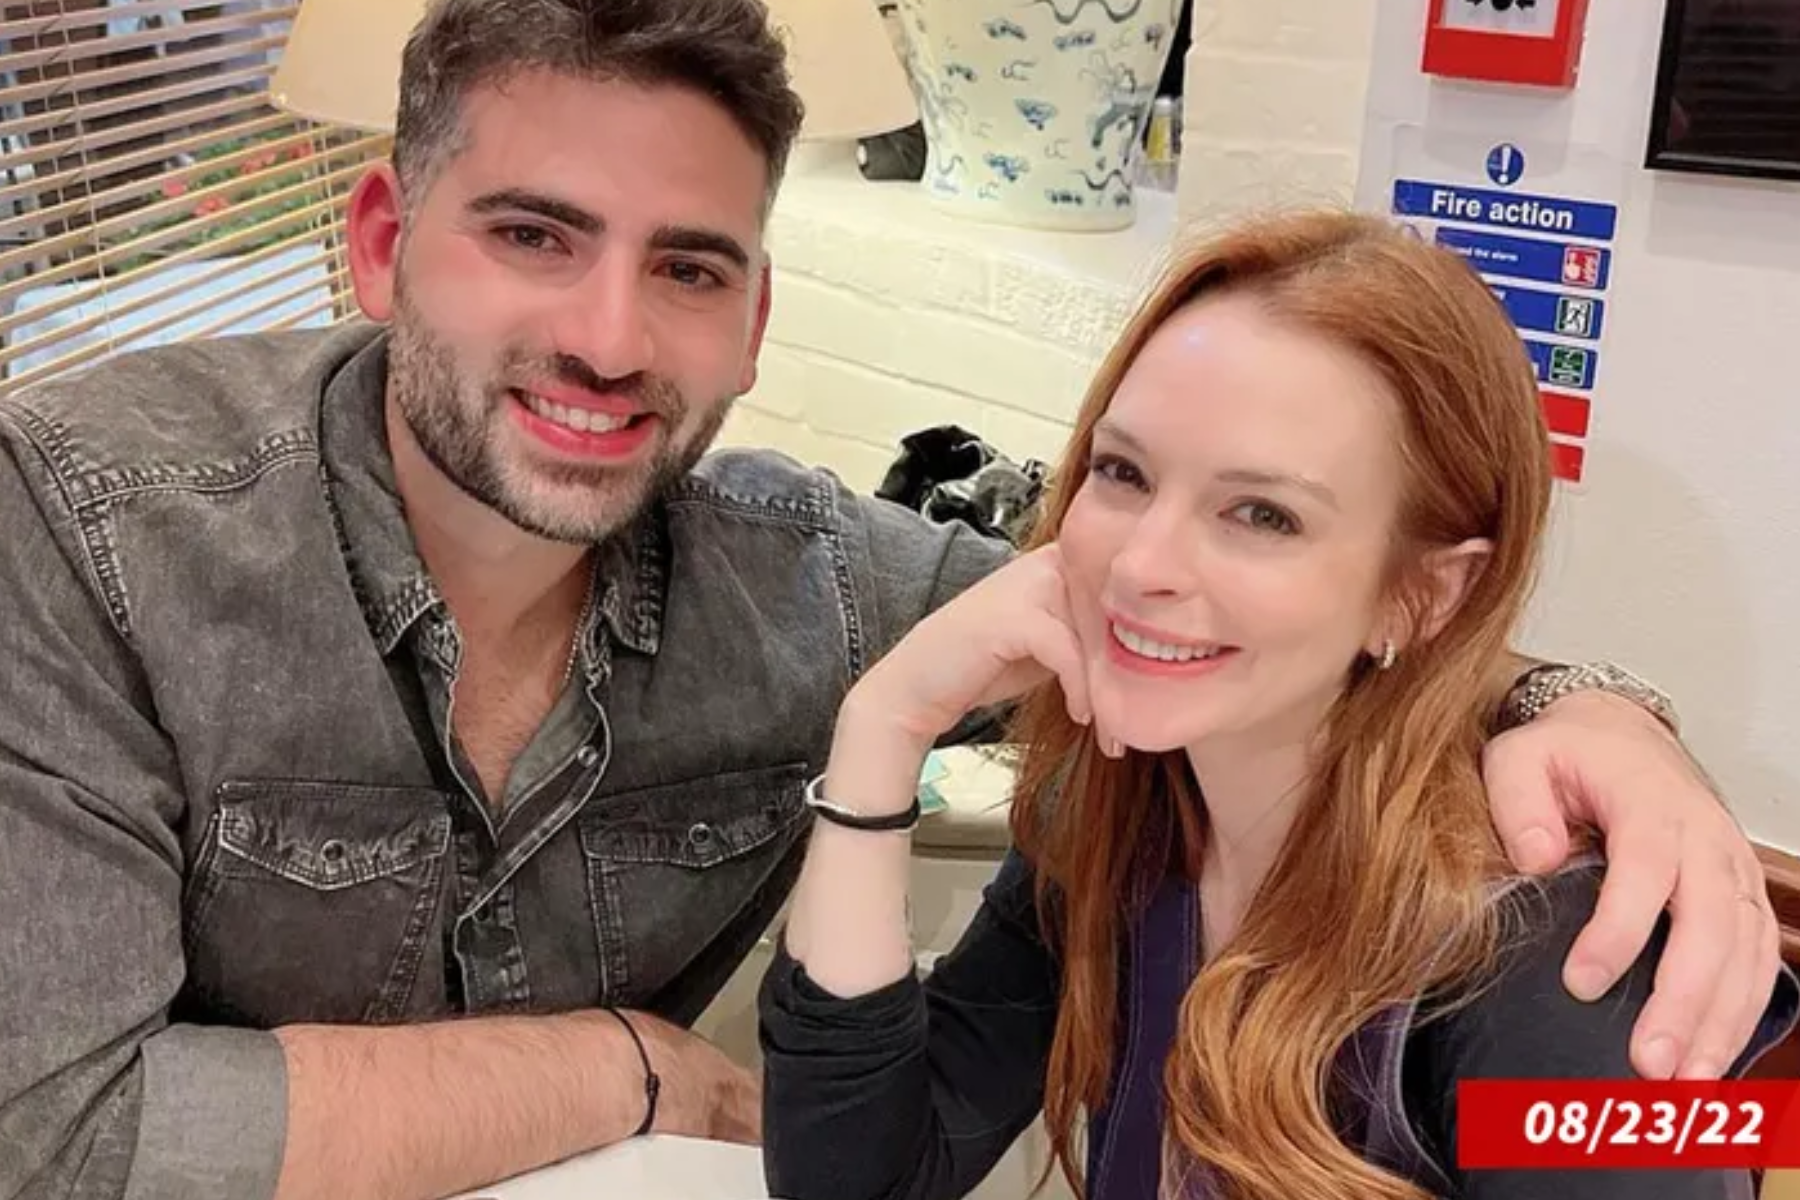 Lindsay Lohan and her husband Bader were at a restaurant